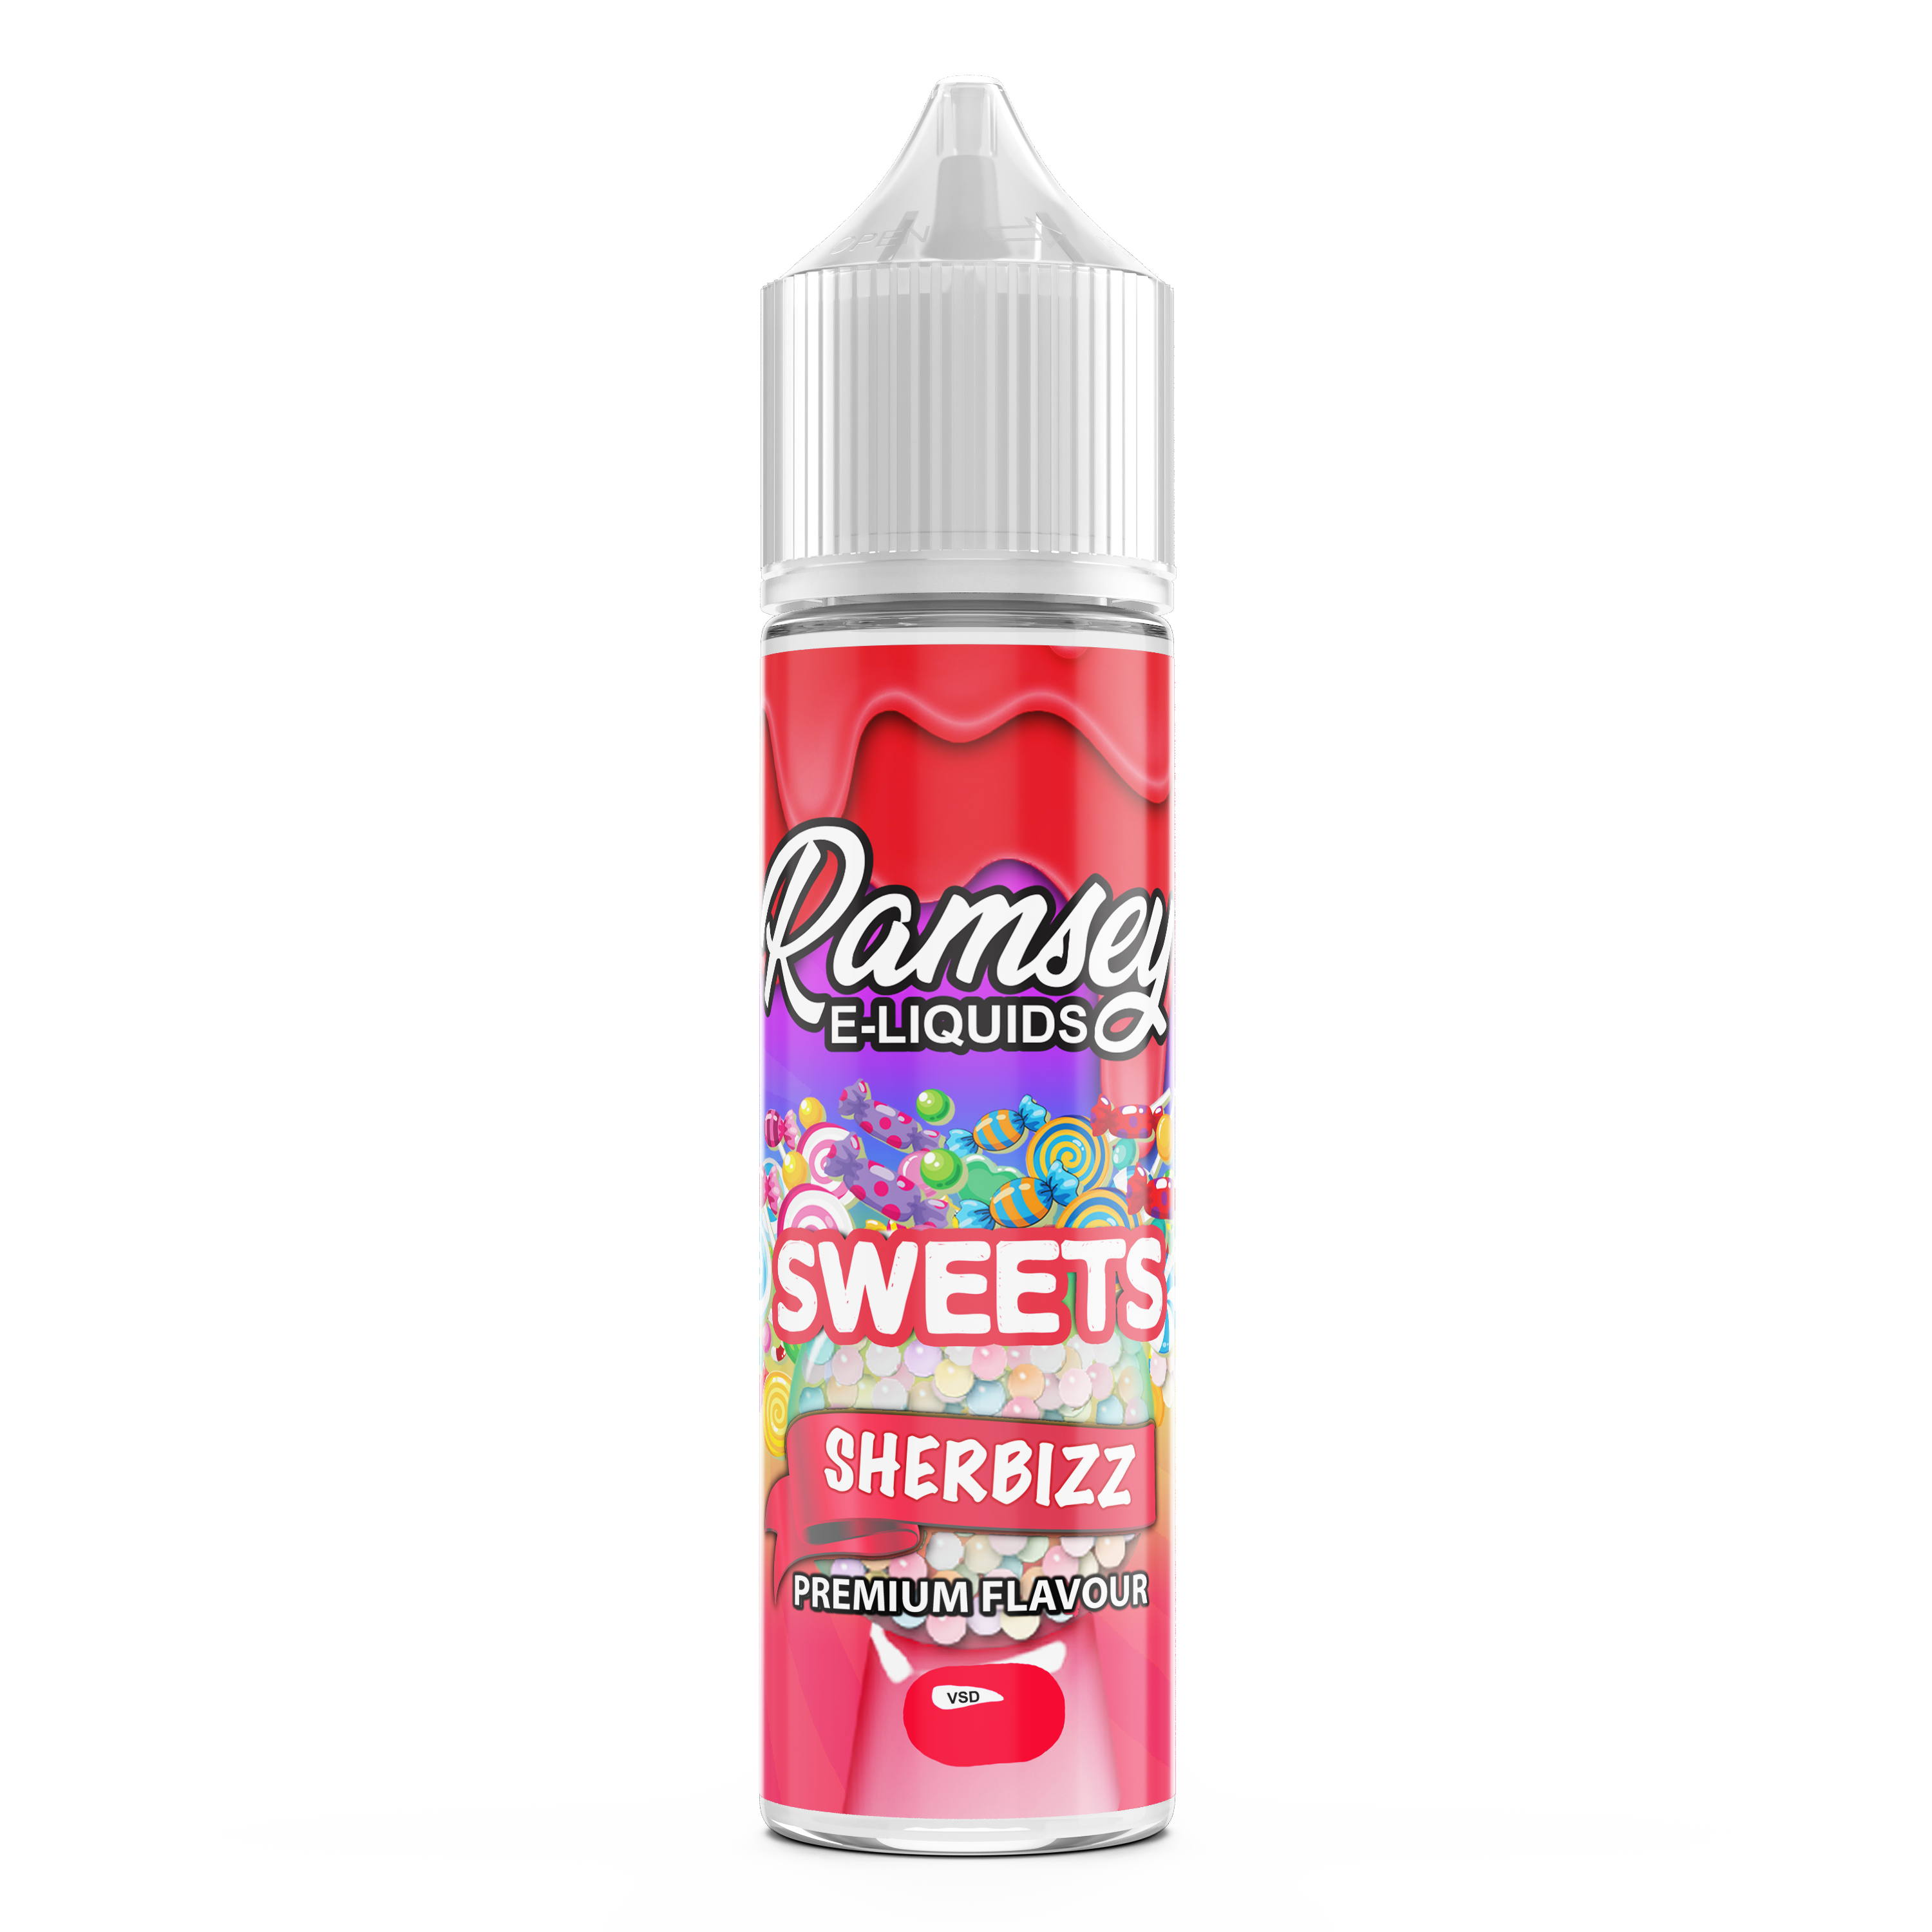 Ramsey E-Liquids Sweets: Sherbizz 0mg 50ml Short Fill E-Liquid